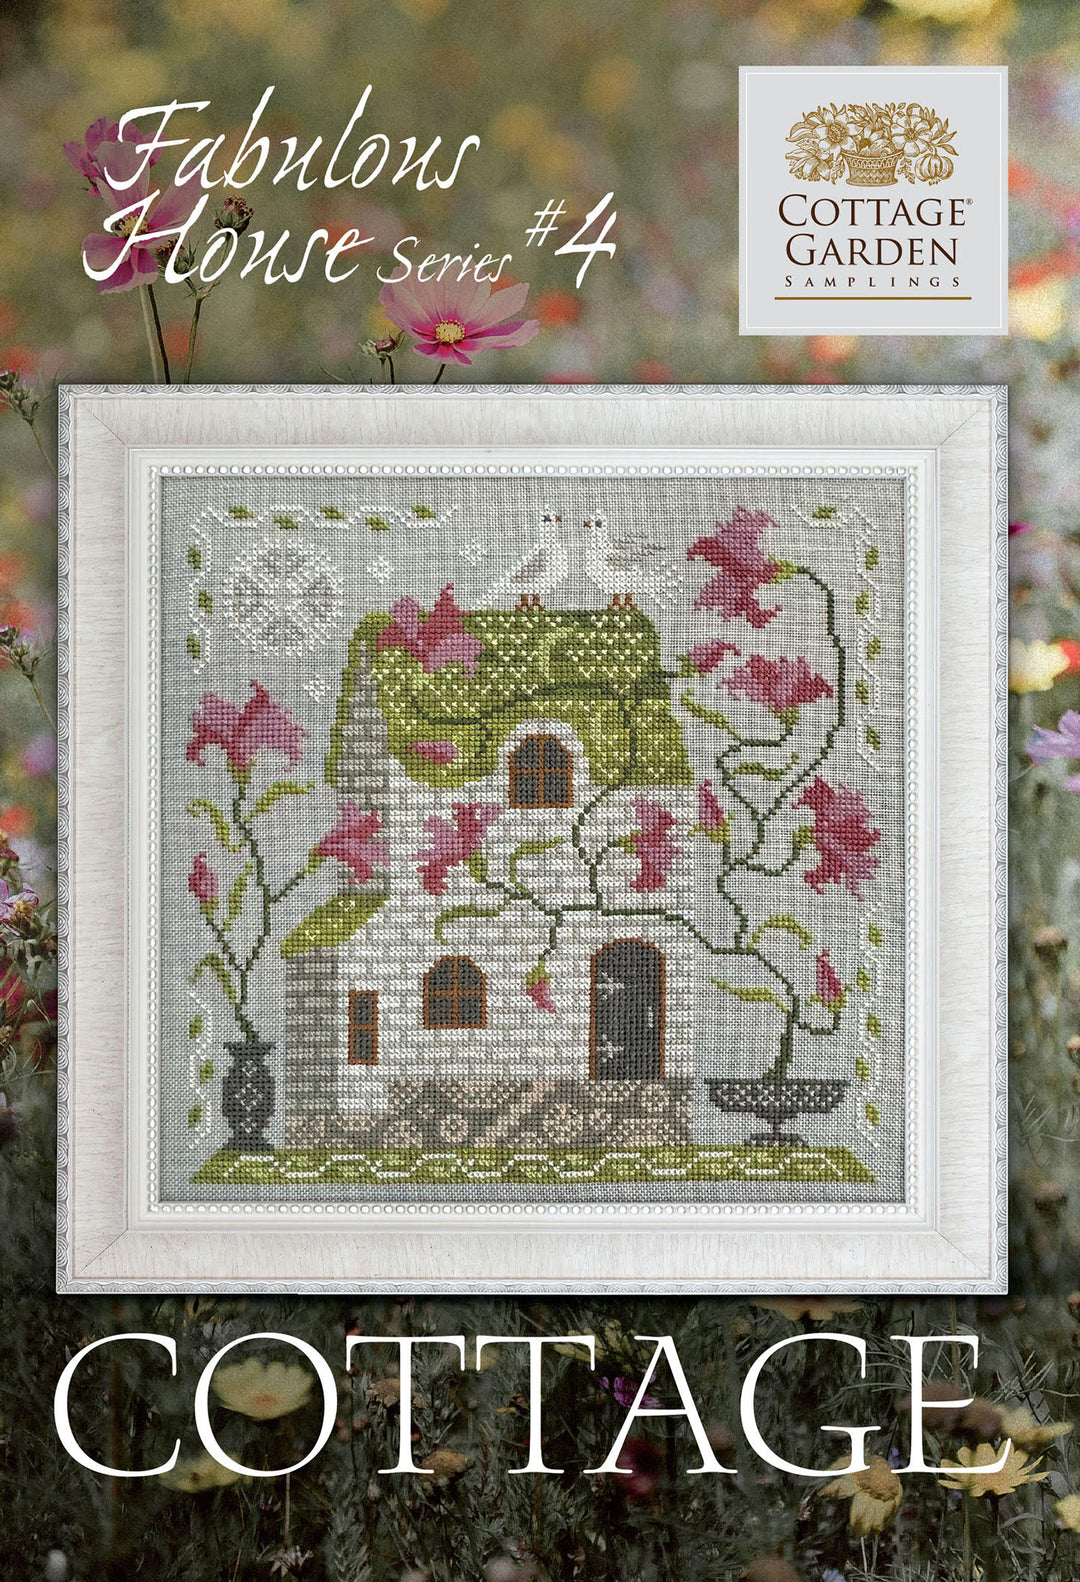 Cottage - Fabulous House Series #4 | Cottage Garden Samplings